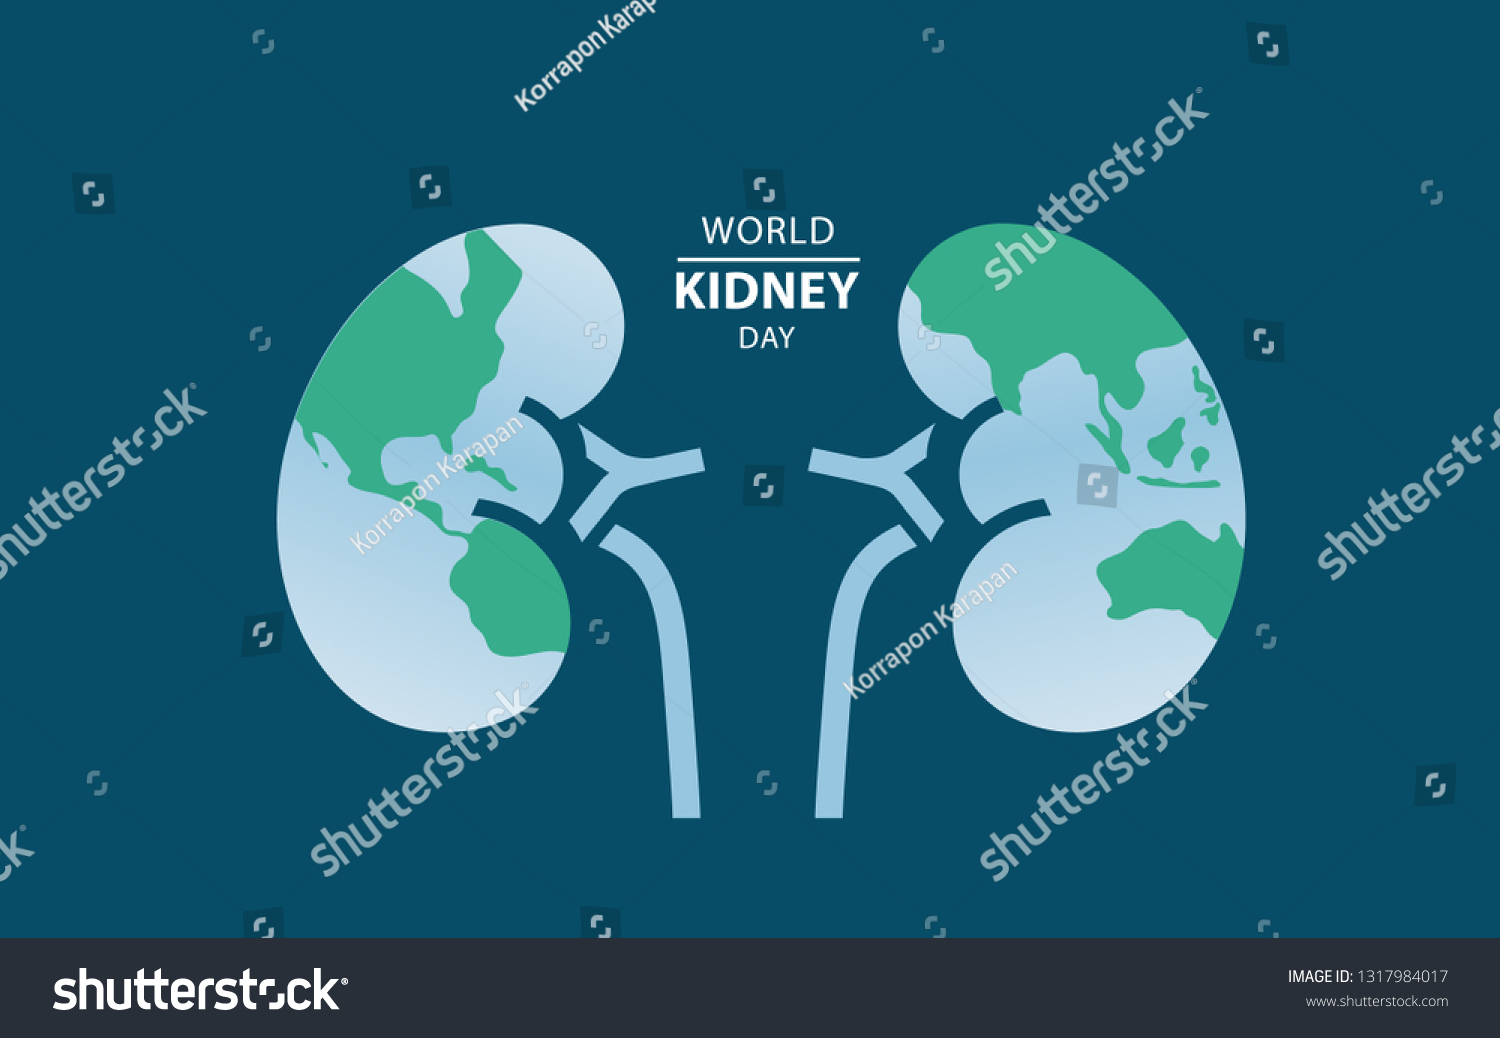 World Kidney Day Card Vector Illustration Stock Vector (Royalty Free ...